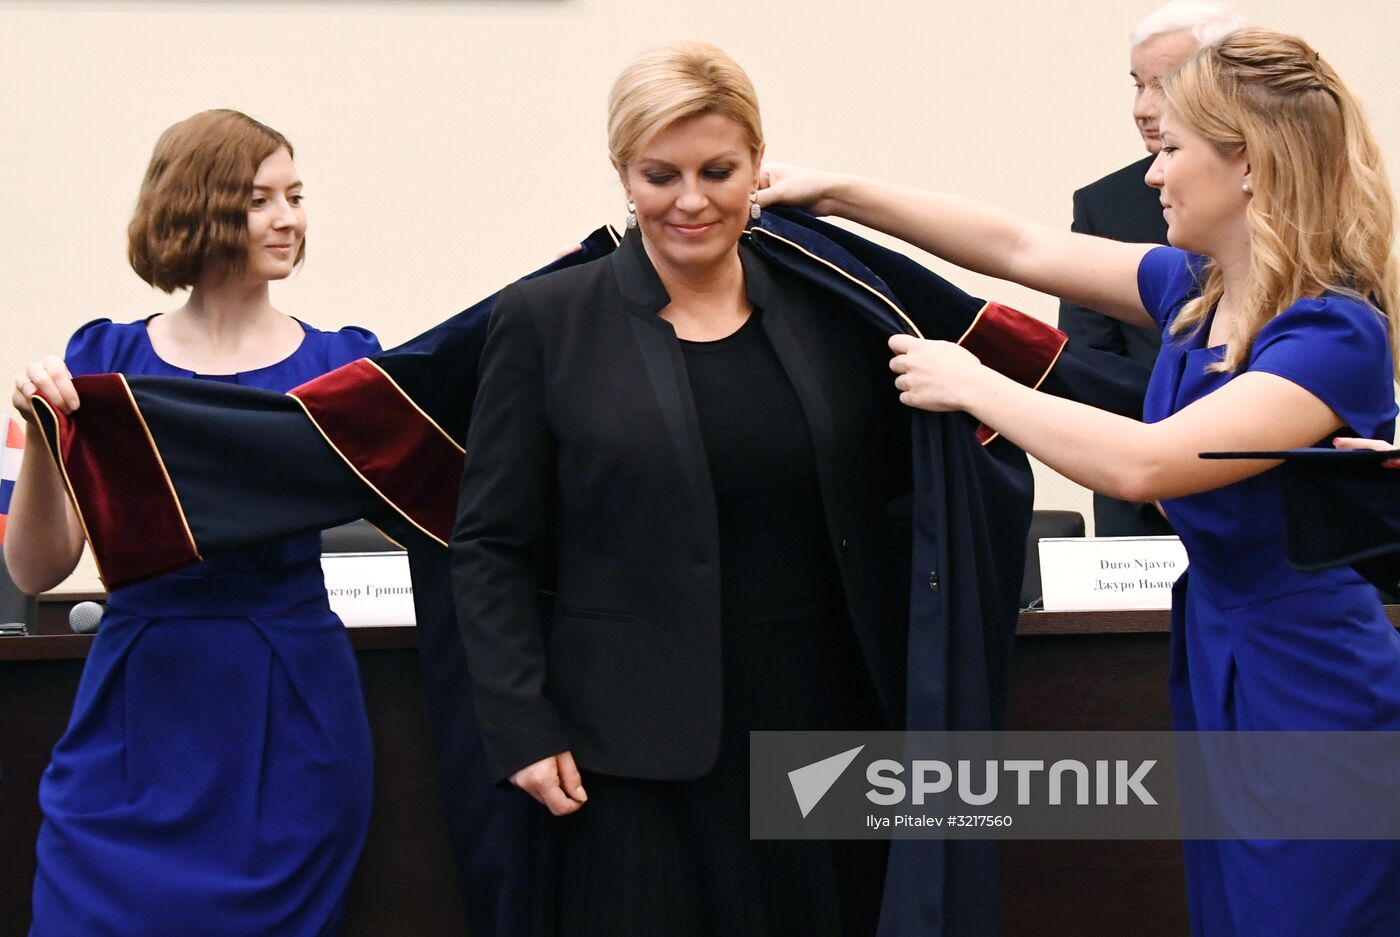 Kolinda Grabar-Kitarovic receives honorary degree from Plekhanov University